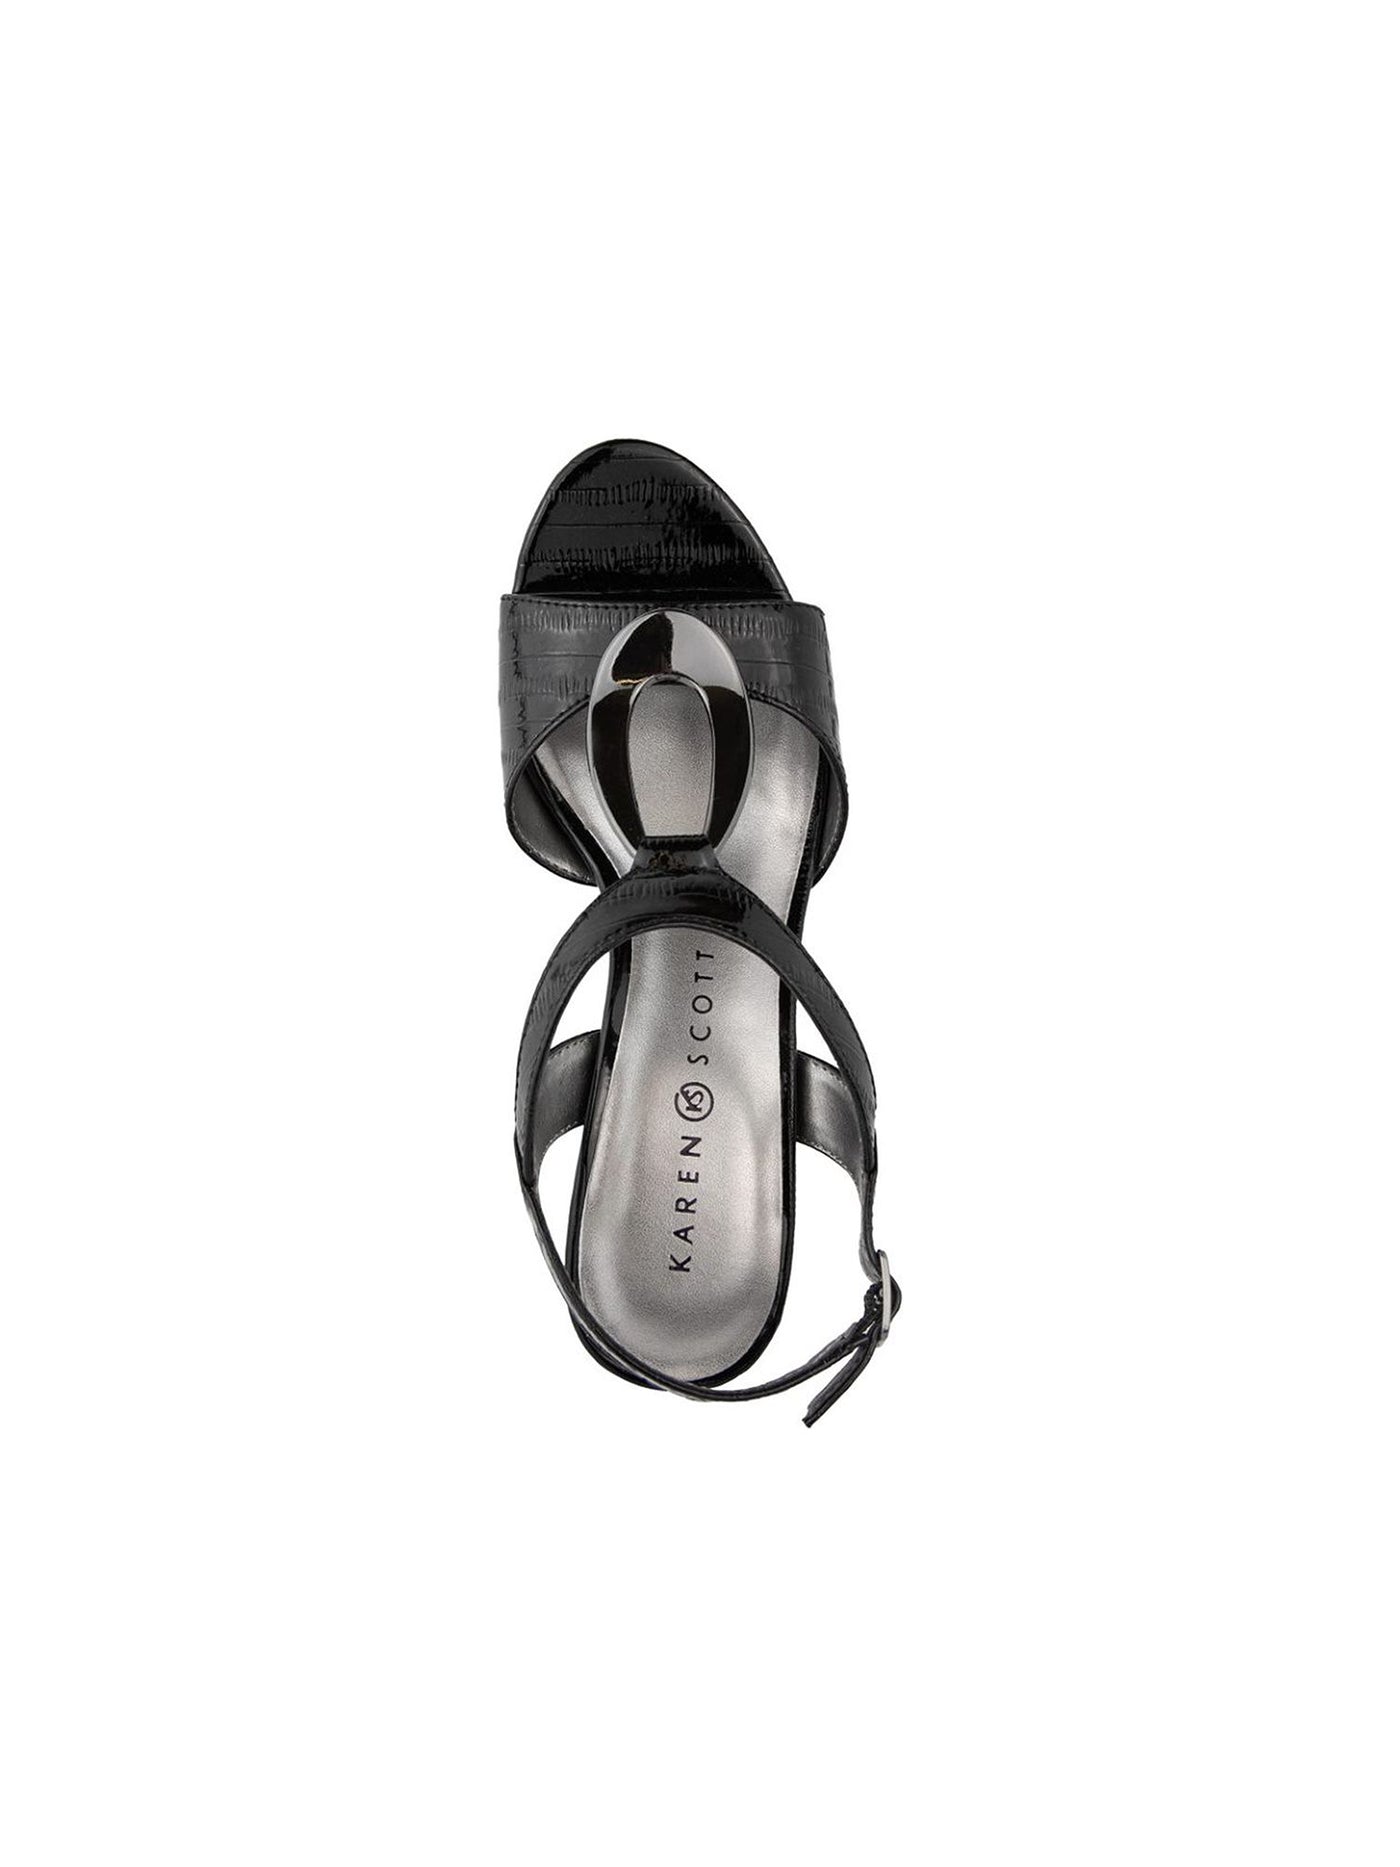 KAREN SCOTT Womens Black Patterned Hardware Detail Padded Adjustable Strap T-Strap Danee Almond Toe Block Heel Buckle Dress Sandals Shoes 5.5 M